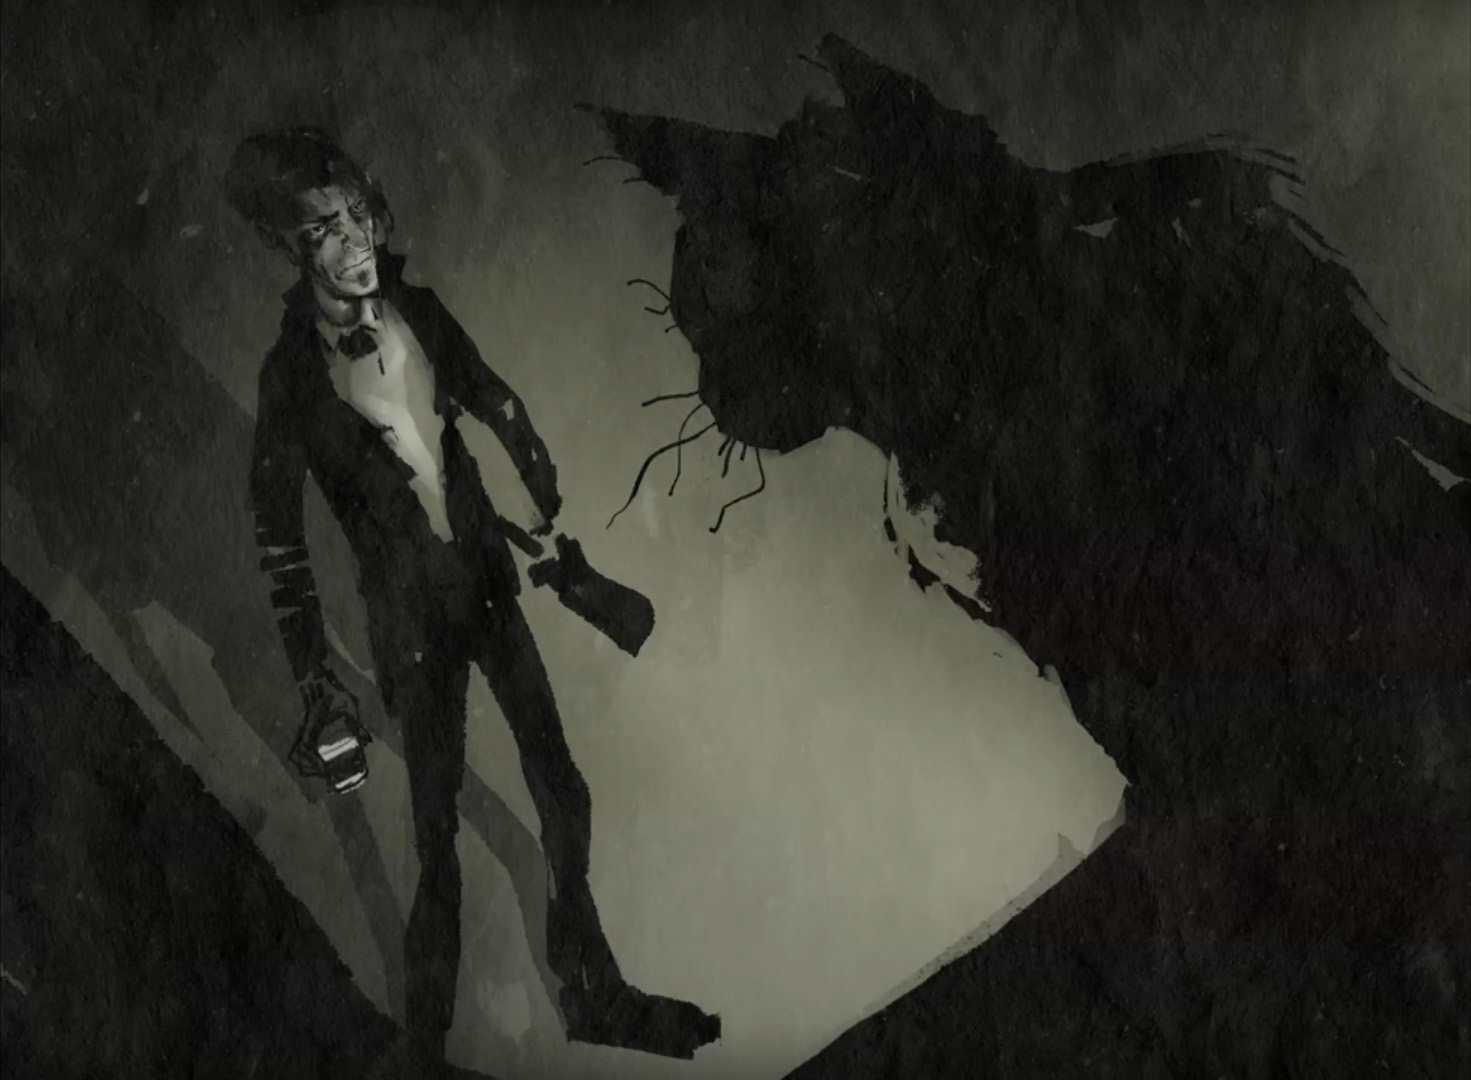 Cats, ravens & madmen. Edgar Allan Poe in animation.